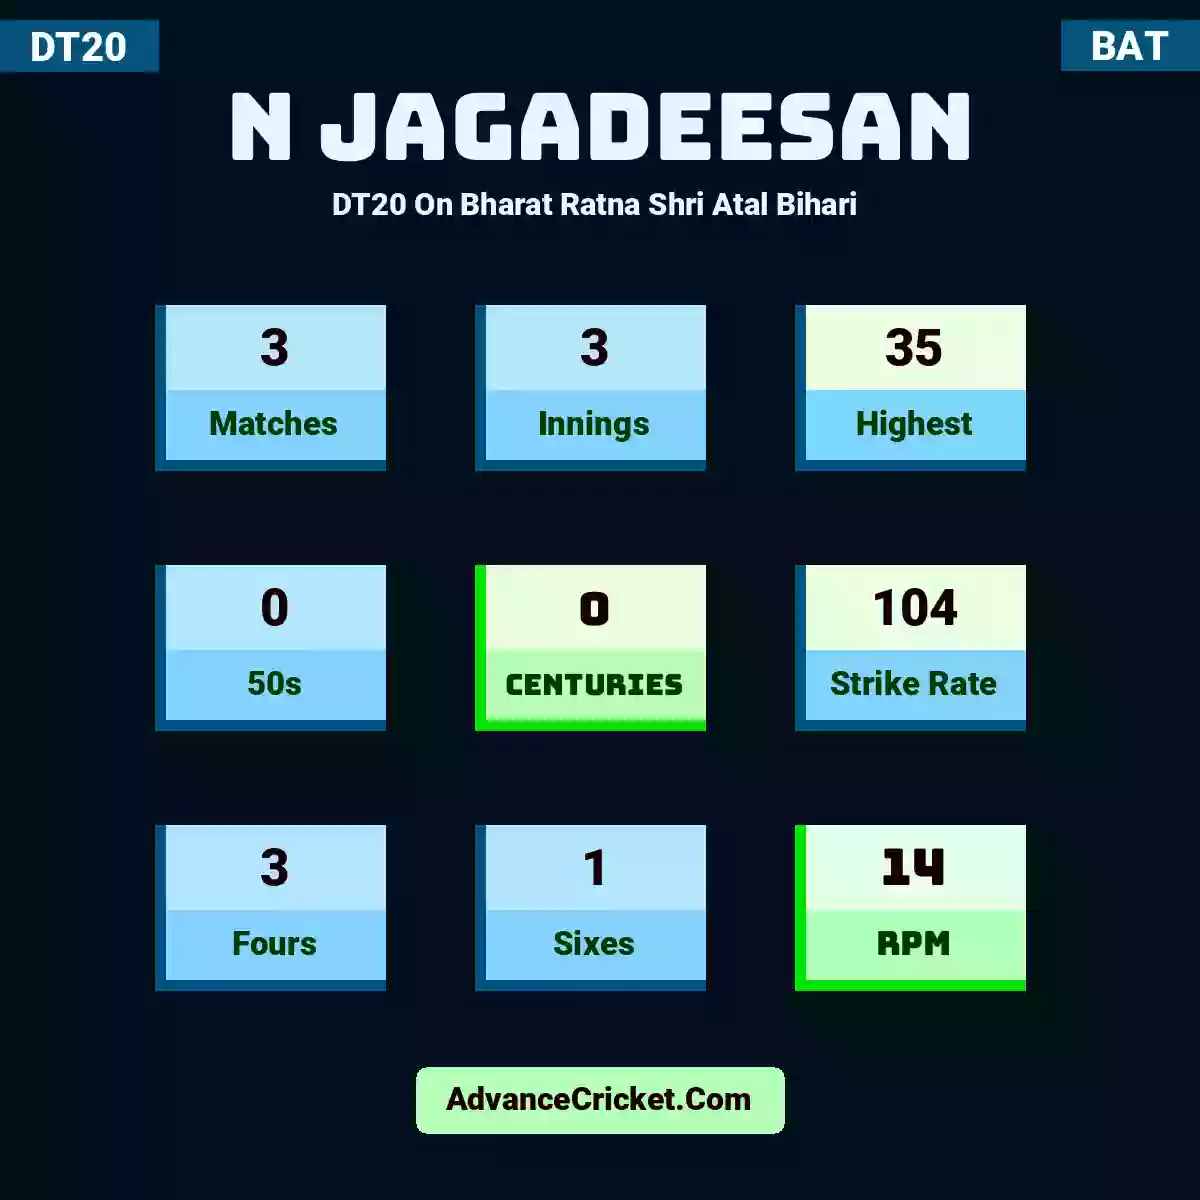 N Jagadeesan DT20  On Bharat Ratna Shri Atal Bihari , N Jagadeesan played 3 matches, scored 35 runs as highest, 0 half-centuries, and 0 centuries, with a strike rate of 104. N.Jagadeesan hit 3 fours and 1 sixes, with an RPM of 14.